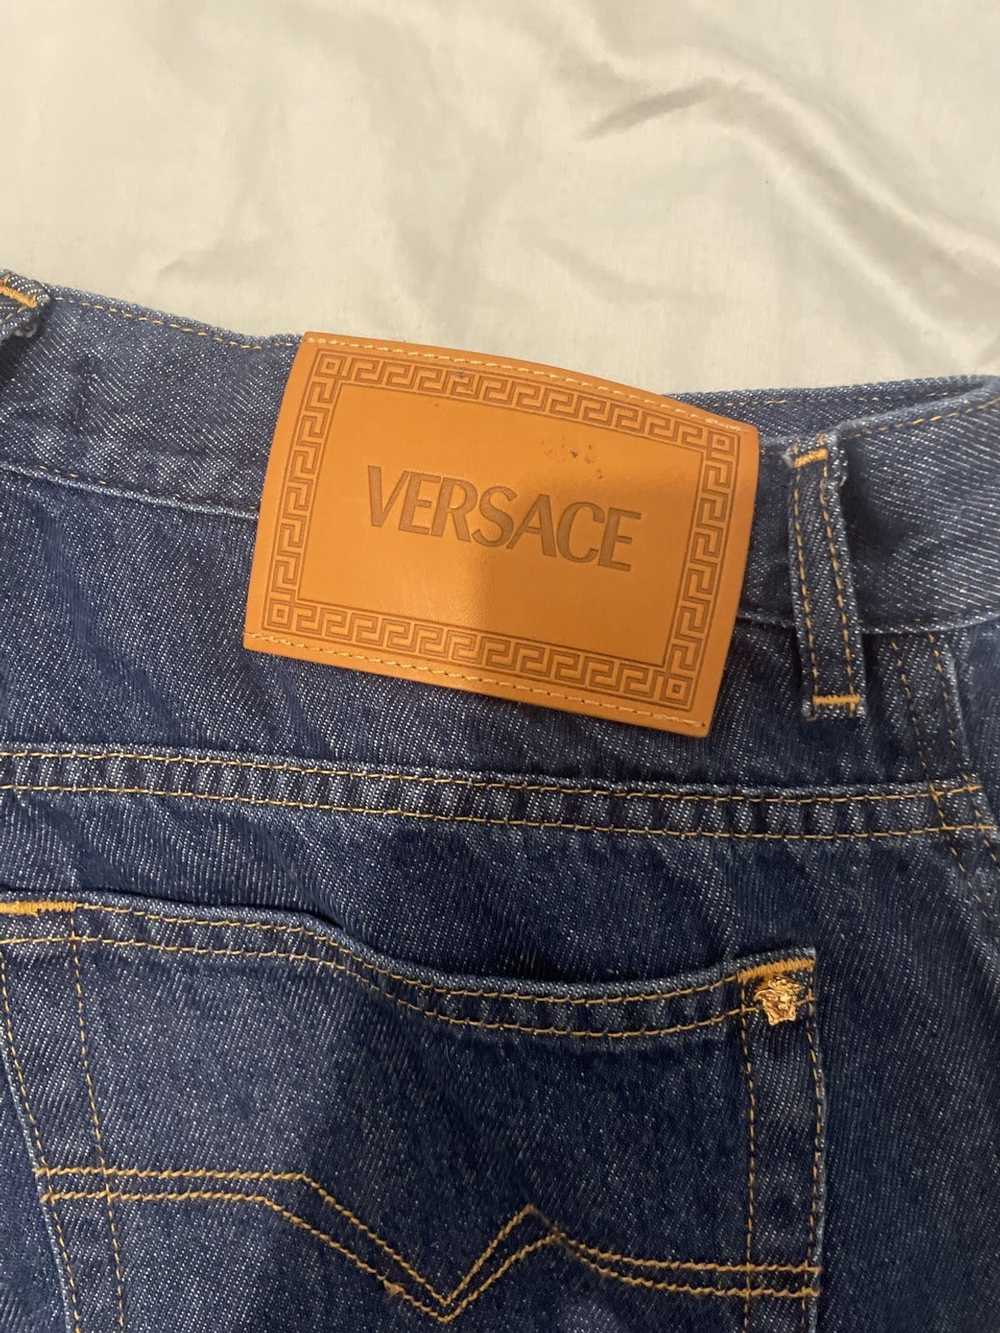 Versace Versace Medusa jeans - image 6